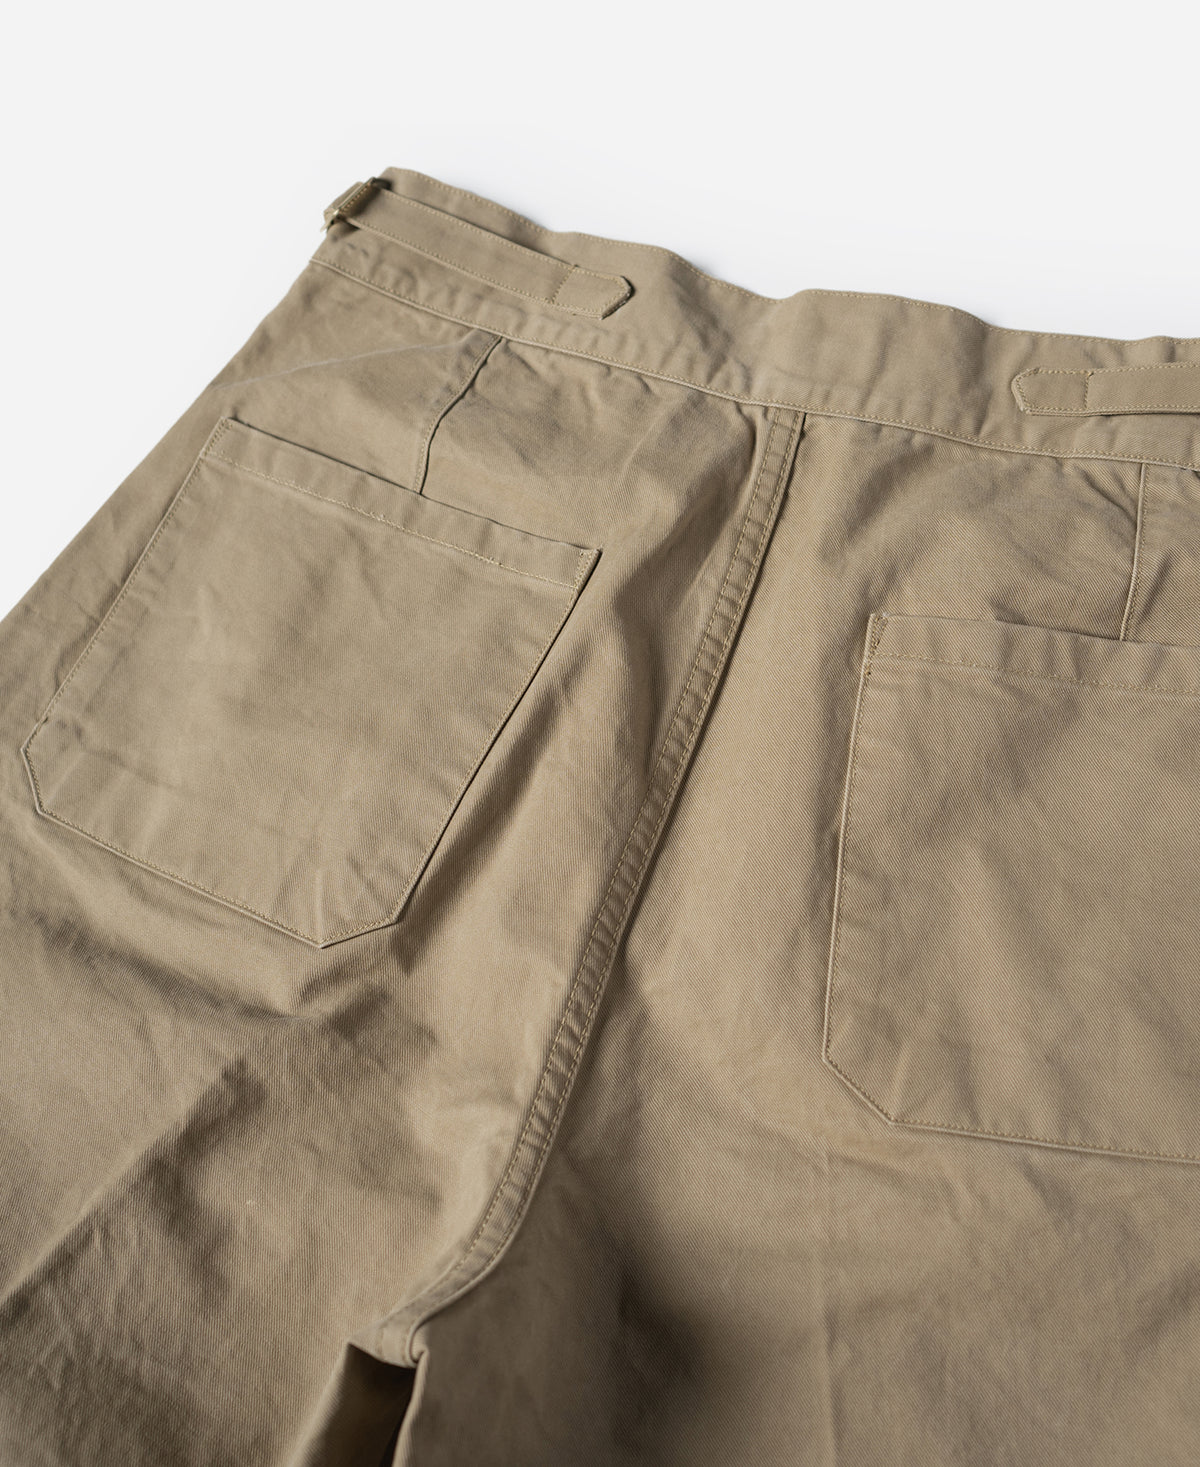 1960s AUS Army Combat Pants - Khaki